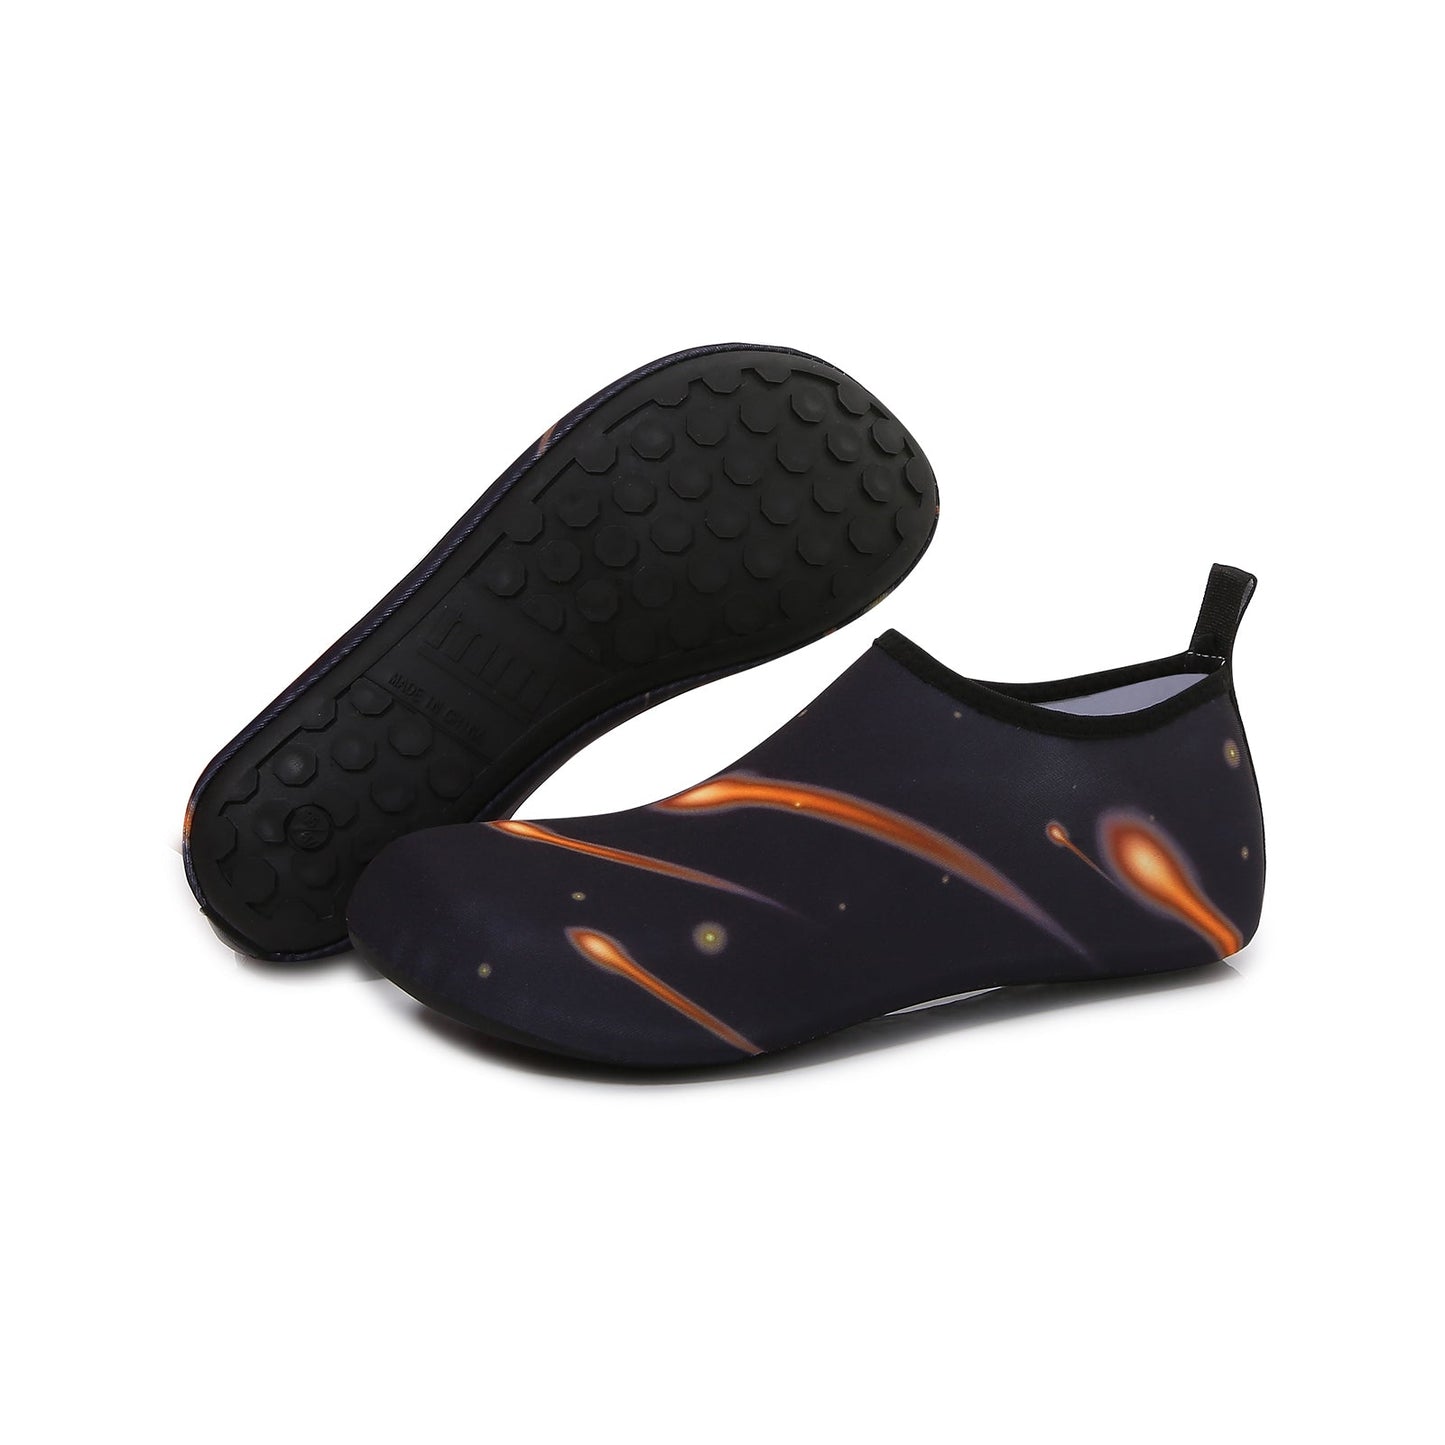 Men and Women a Slip On Barefoot Quick-Dry Beach Aqua Yoga Water Shoes (Shooting Star/Black)